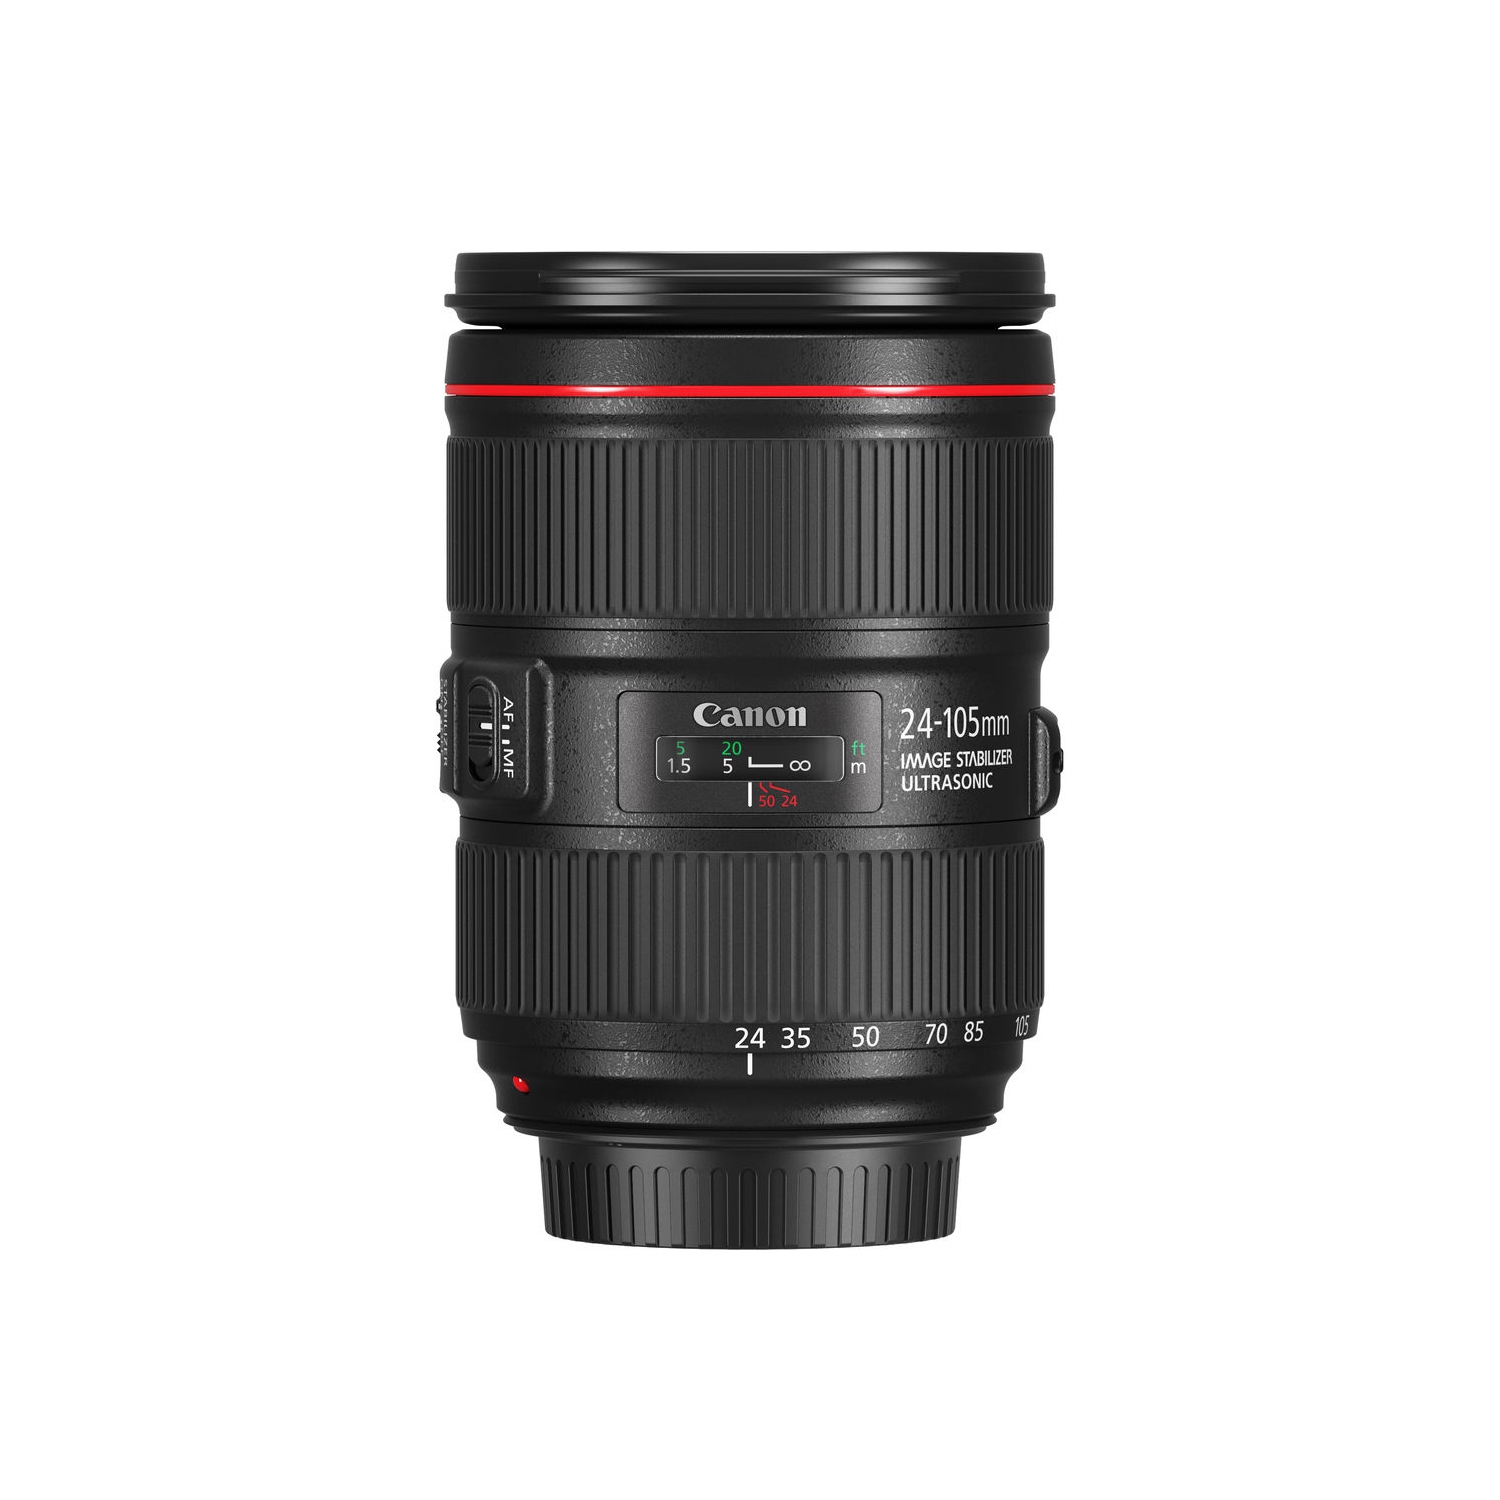 Canon EF 24-105mm f/4L IS II USM Lens (1380C002) + Filter + Cap